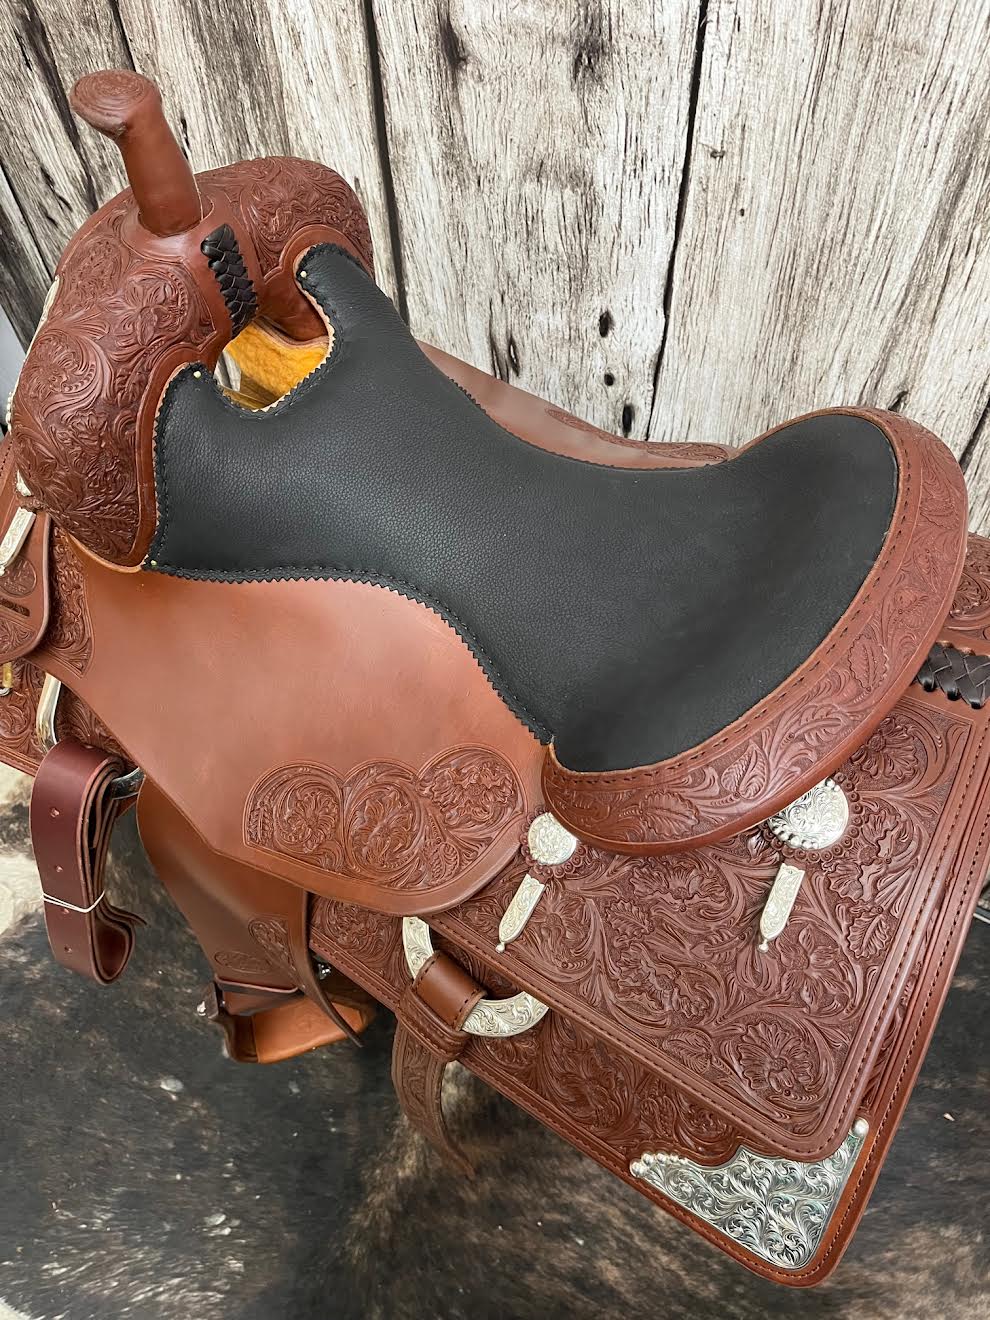 🔥SOLD🔥 Bob’s Custom Saddles